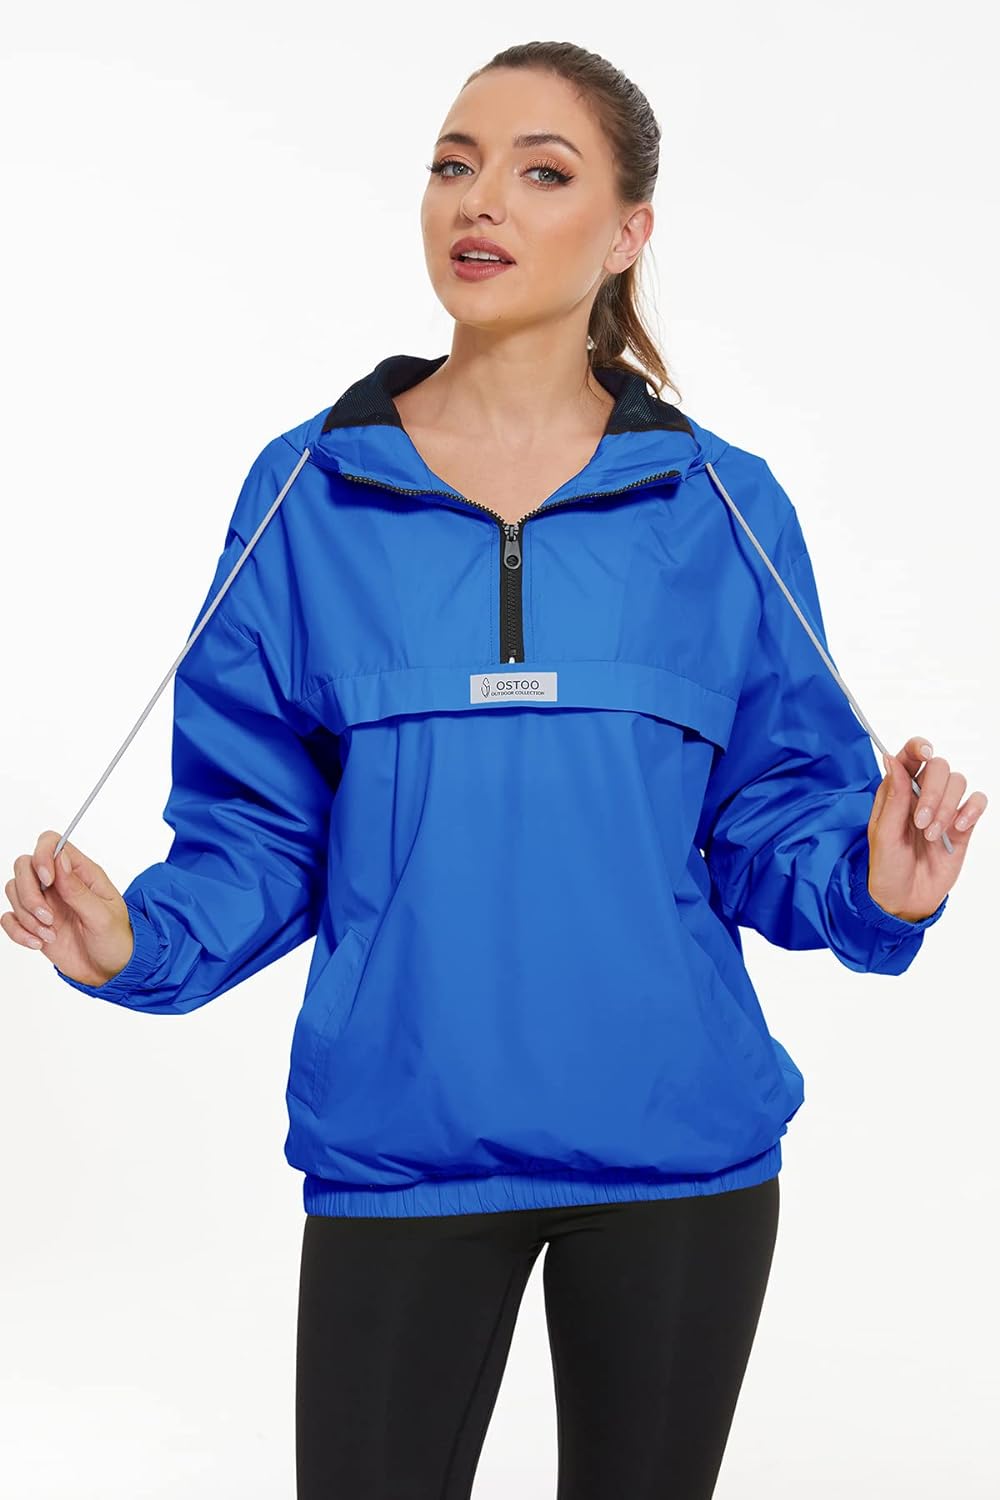 Womens Running Cycling Lightweight Rain Jacket for Women Waterproof with Hood Hiking Wind Breakers Male Raincoat Pullover, Blue, Medium